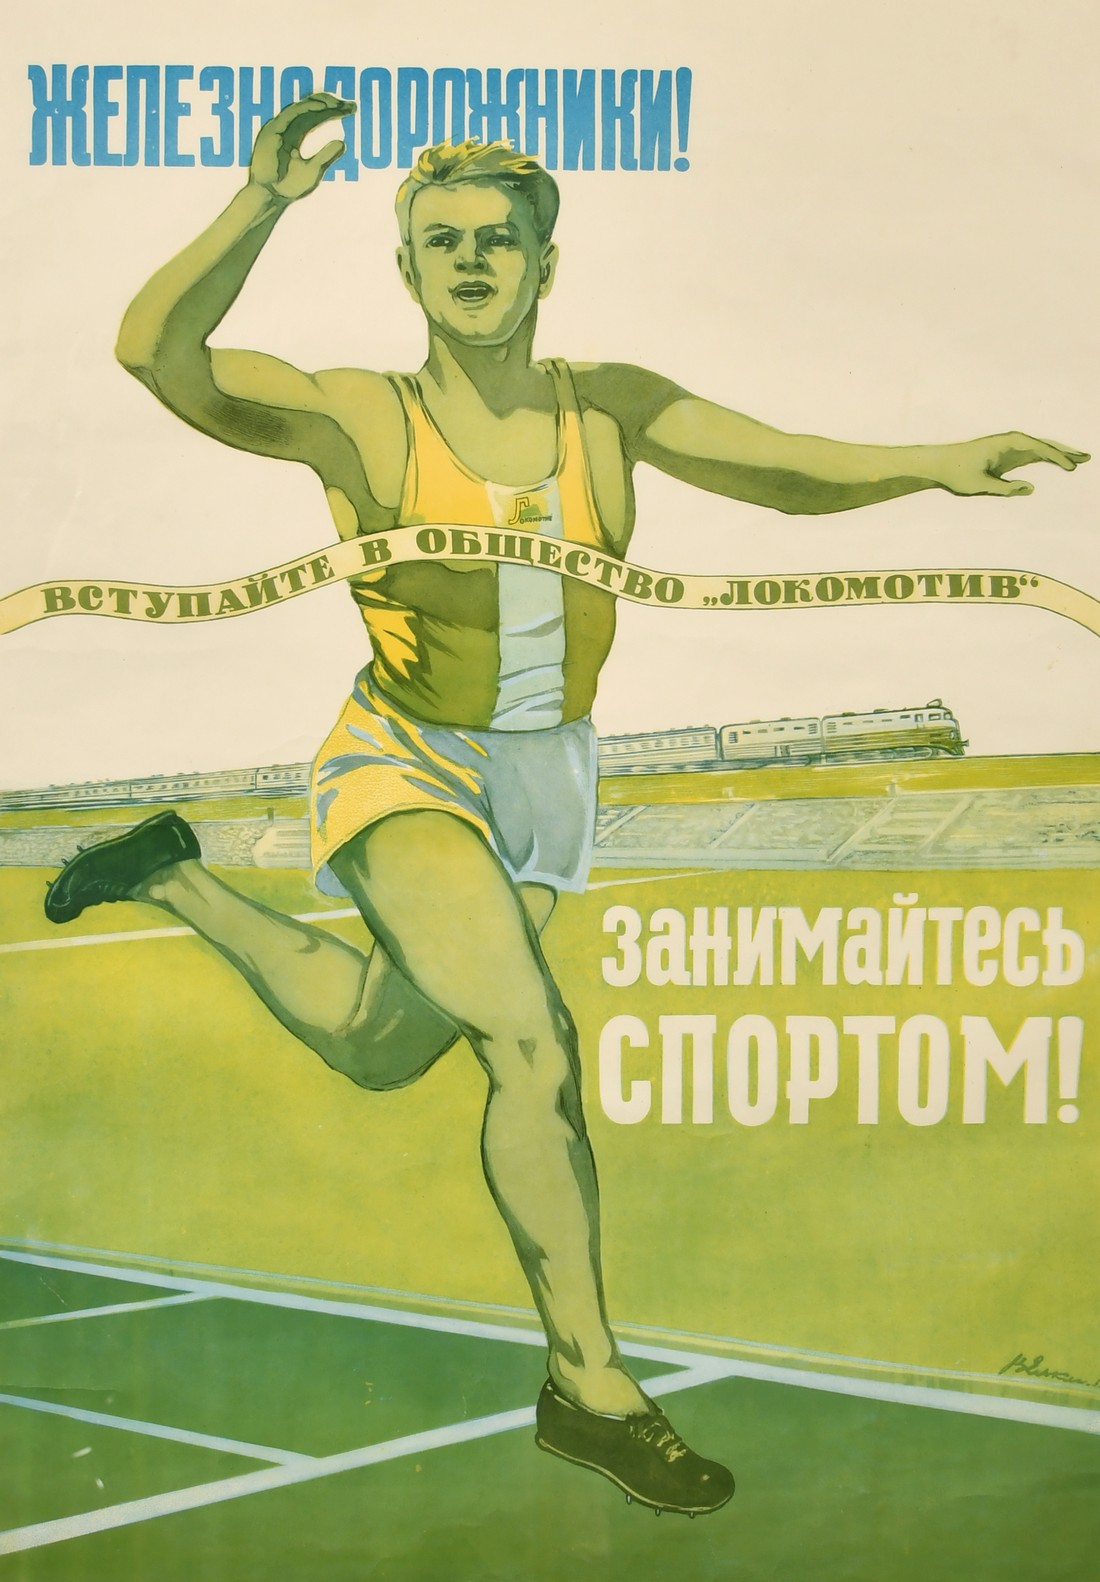 Russian, Circa 1957, a framed poster advertising an athletics meeting, 31.5" x 22".